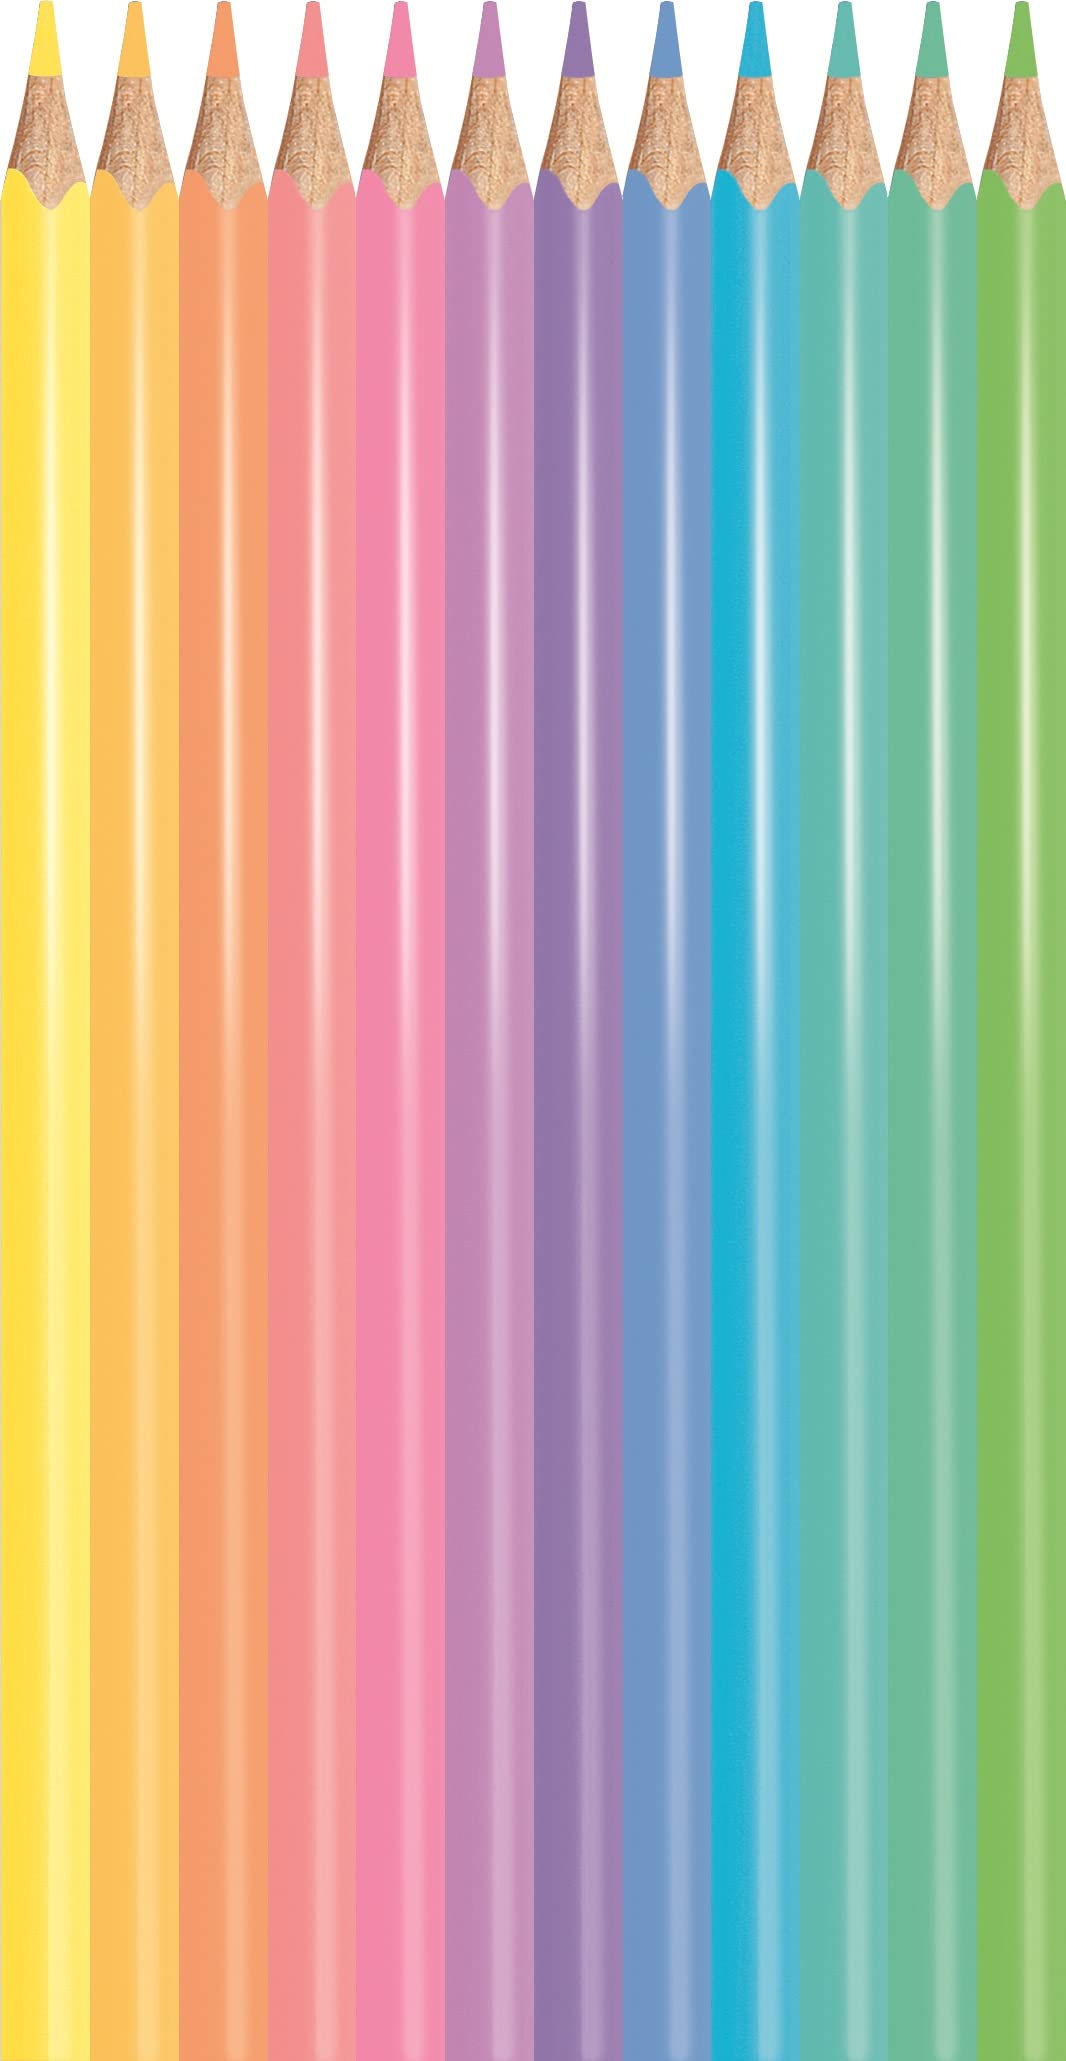 Maped Color'Peps Pastel Color Pencils Set - Pack of 12 مابد مجموعة اقلام تلوين باستيل من كولور بيبس - عبوة من 12 قطعة